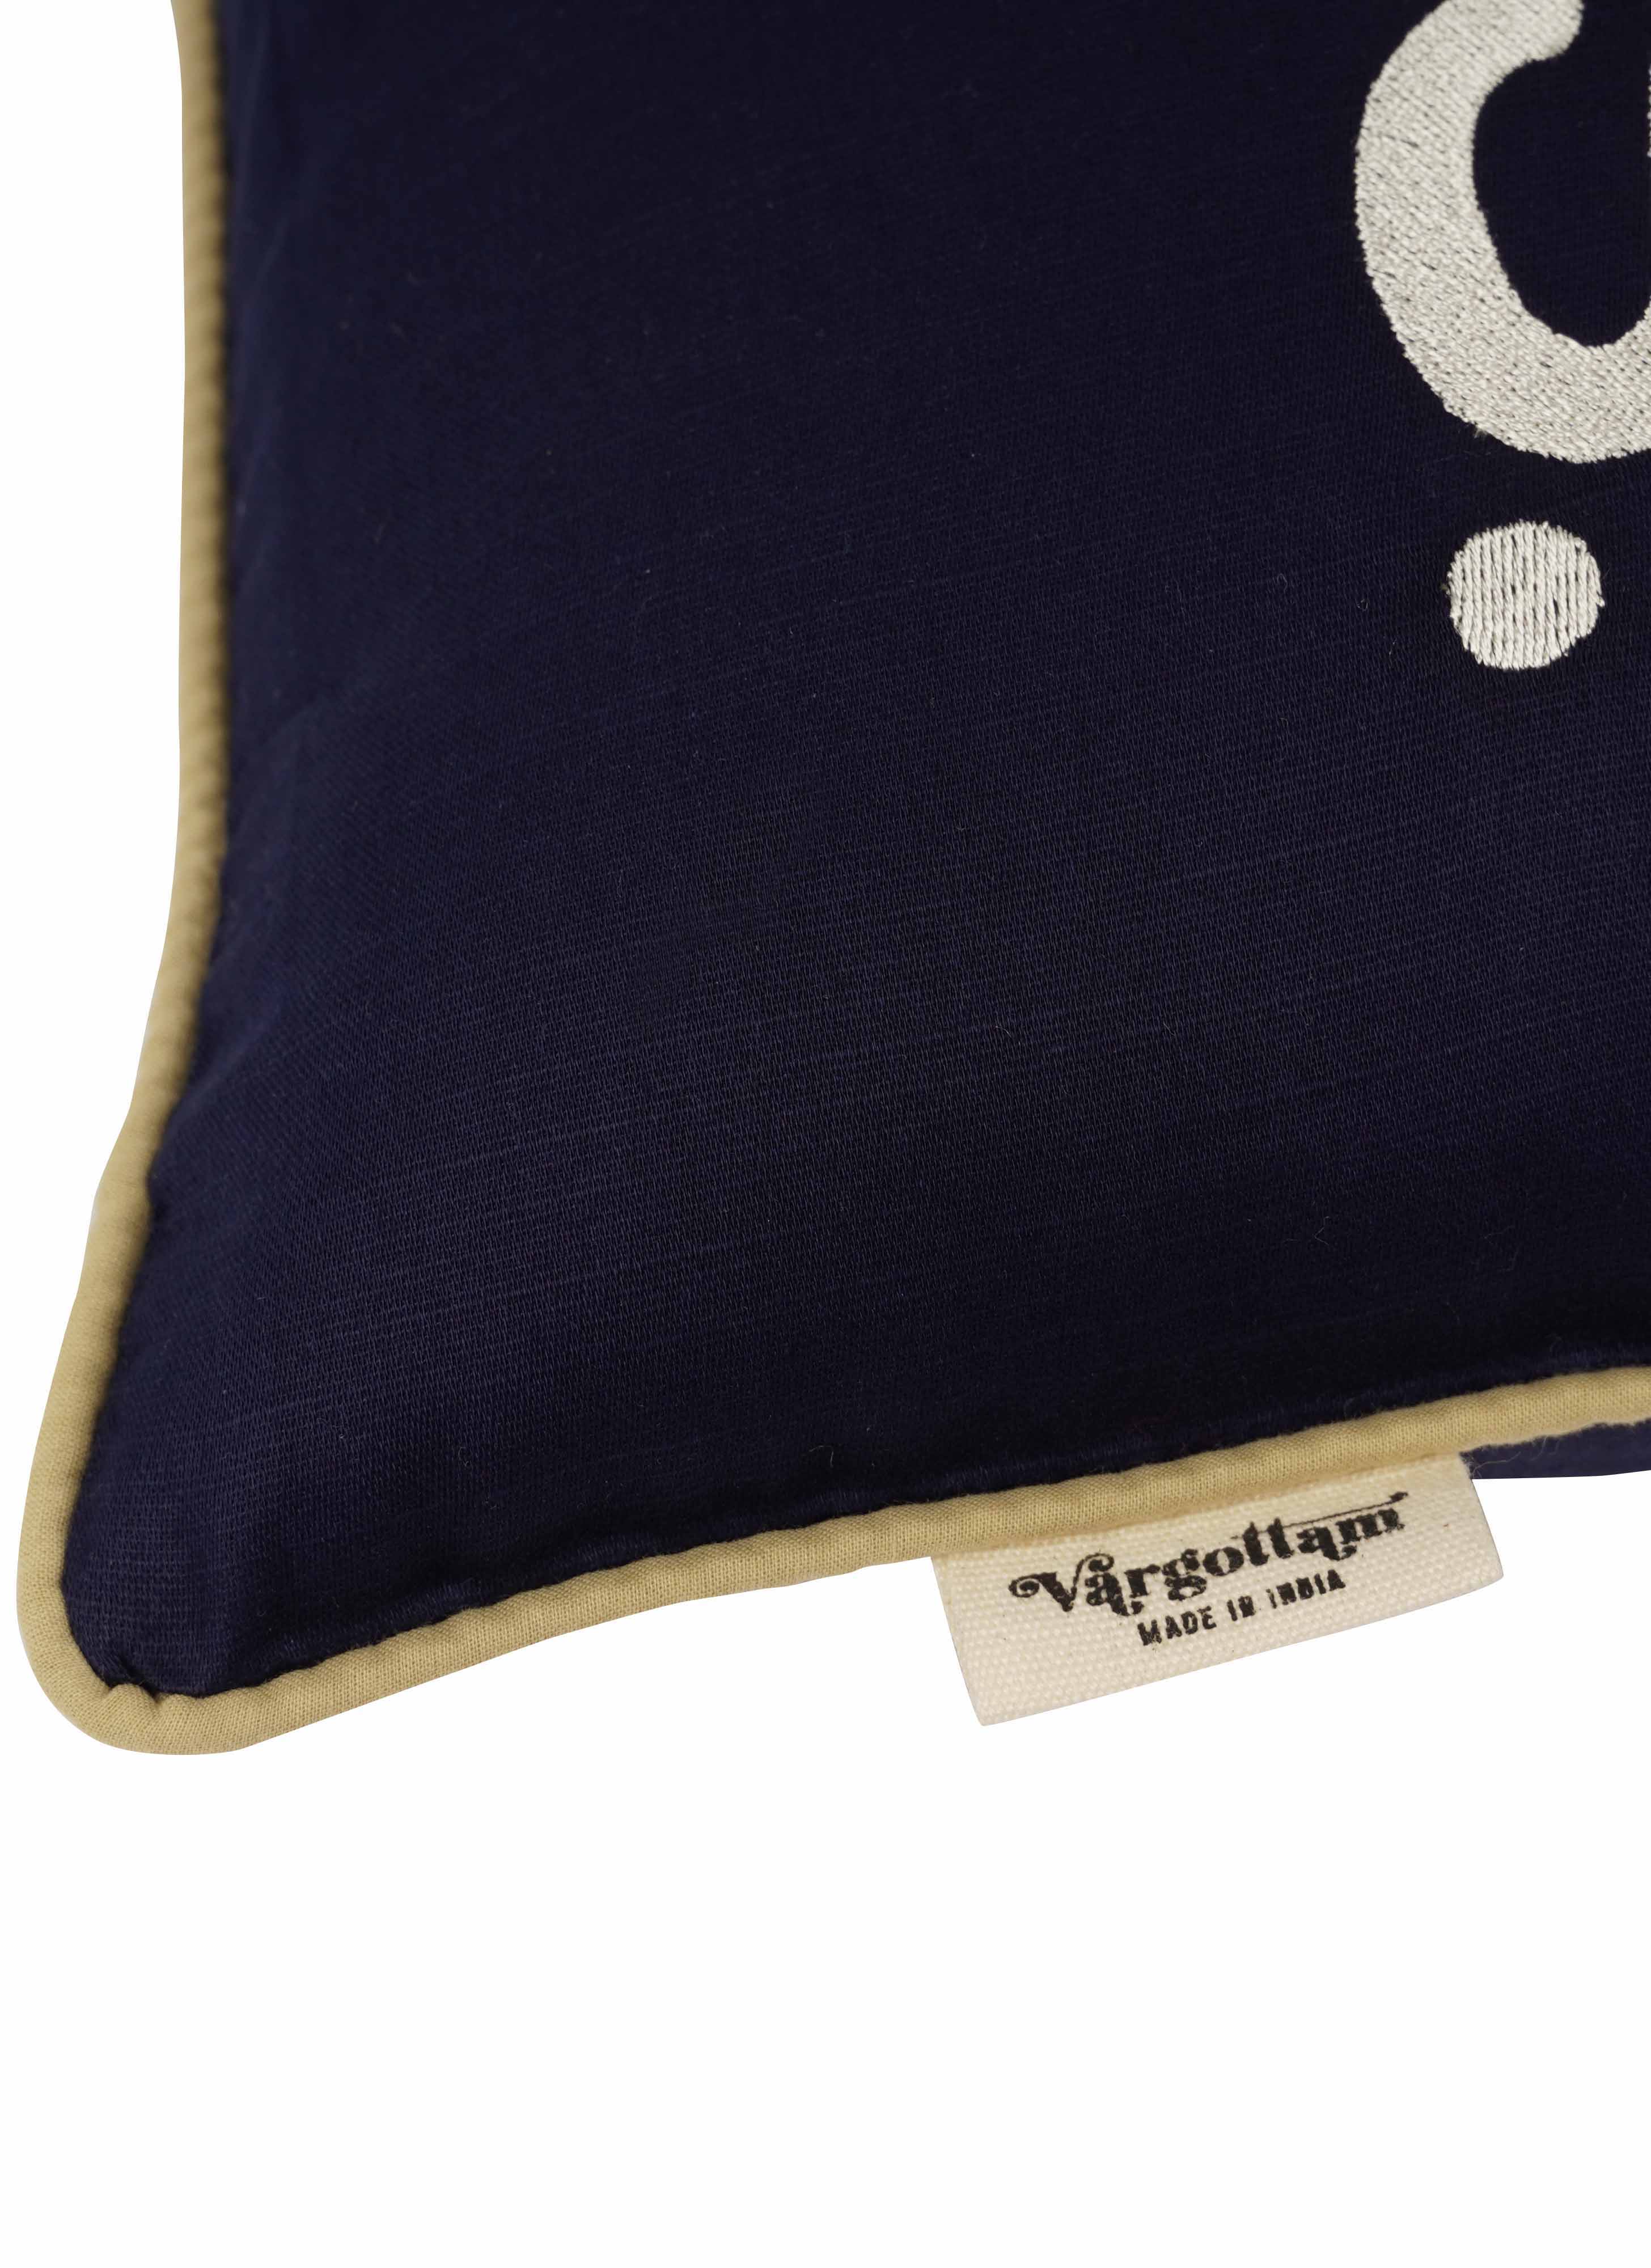 Vargottam Embroidered Mr & Mrs Lumbar Decorative Throw Pillow Cover-RCG 